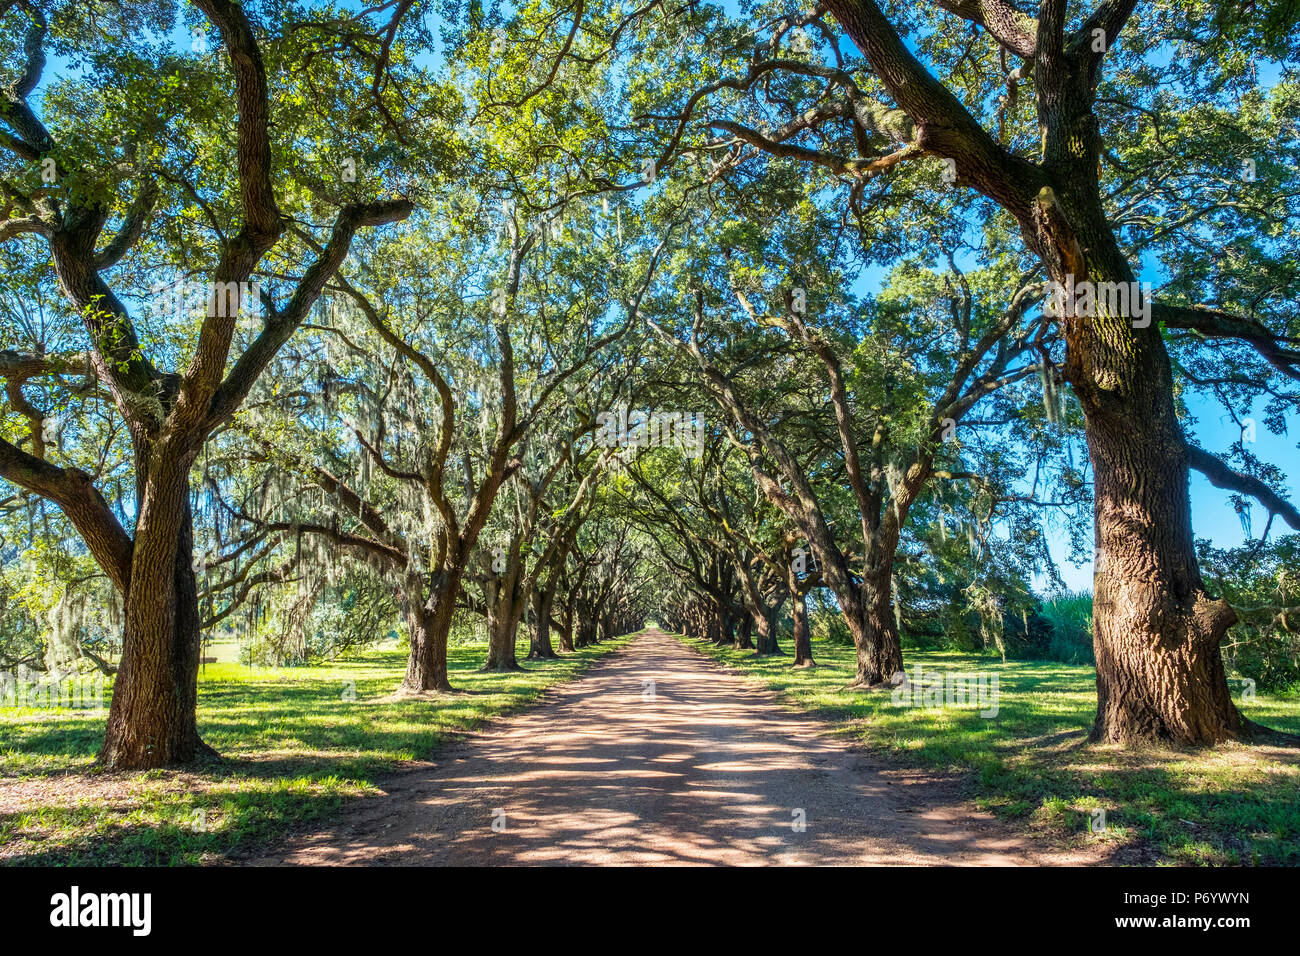 United States, Louisiana, St. John the Baptist Parish. Evergreen Plantation road lined with southern live oak (Quercus virginiana) trees. Stock Photo